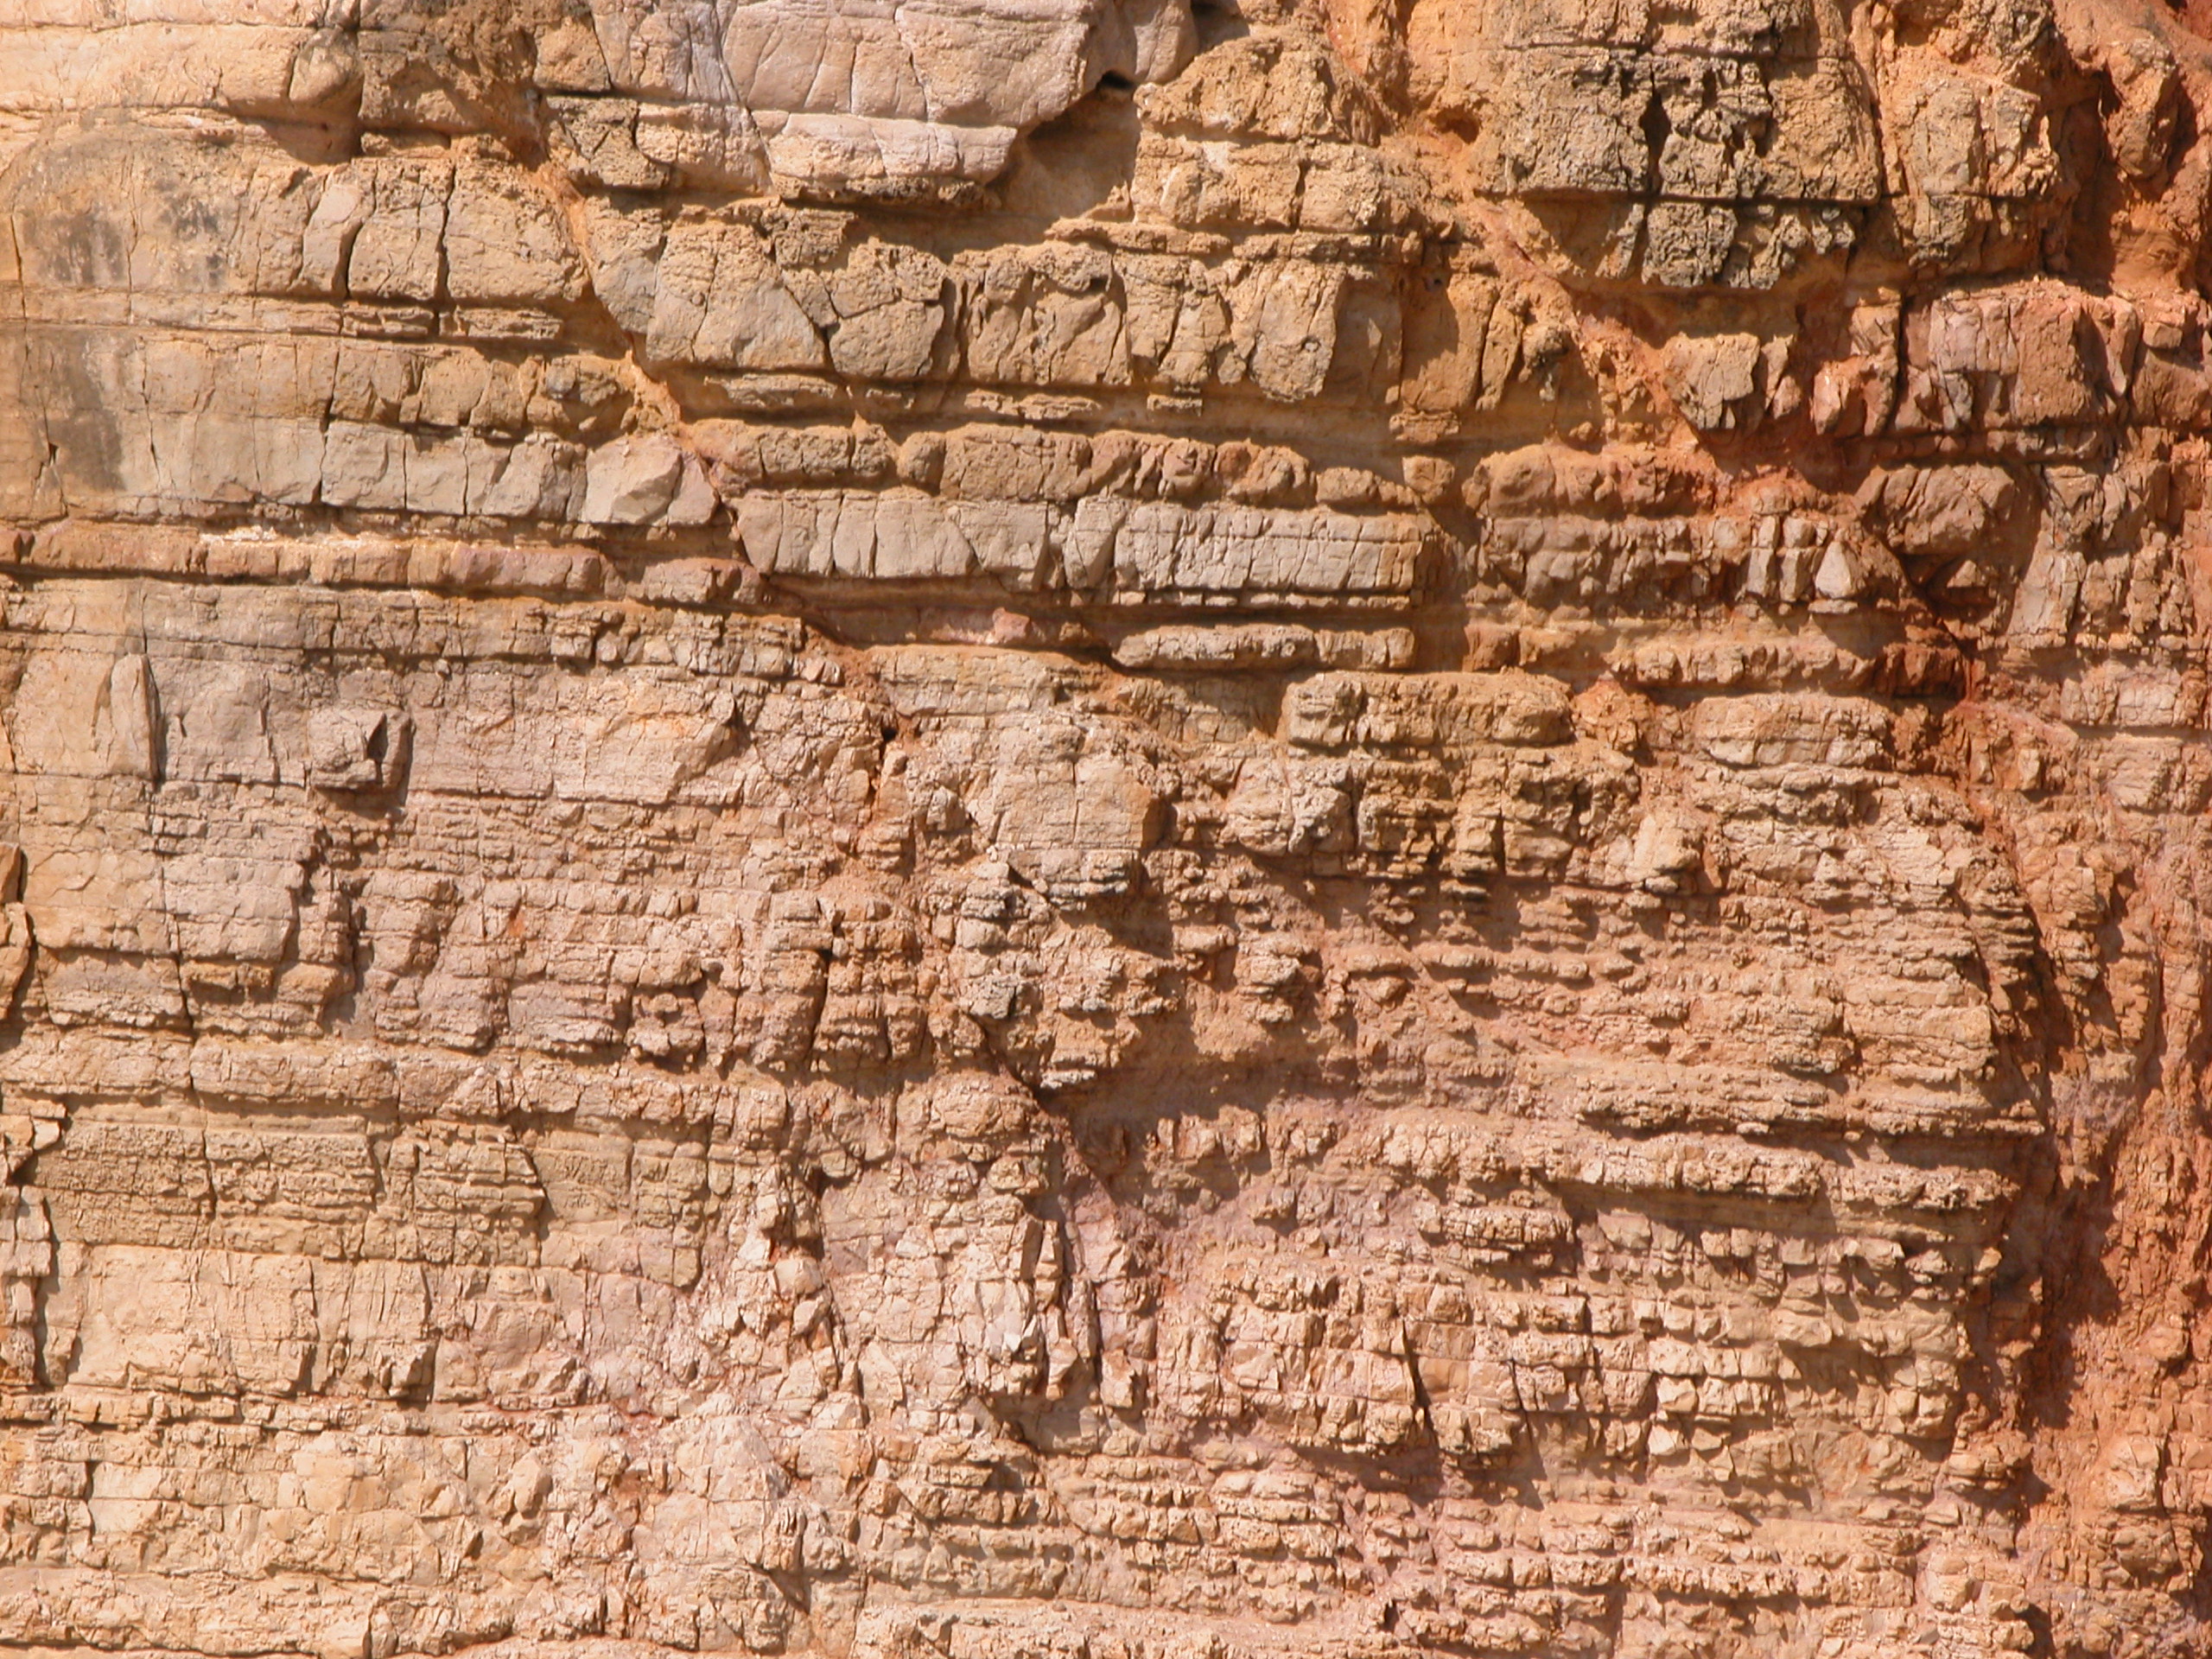 Image*After : photos : rock cliff face brown rocks cracks